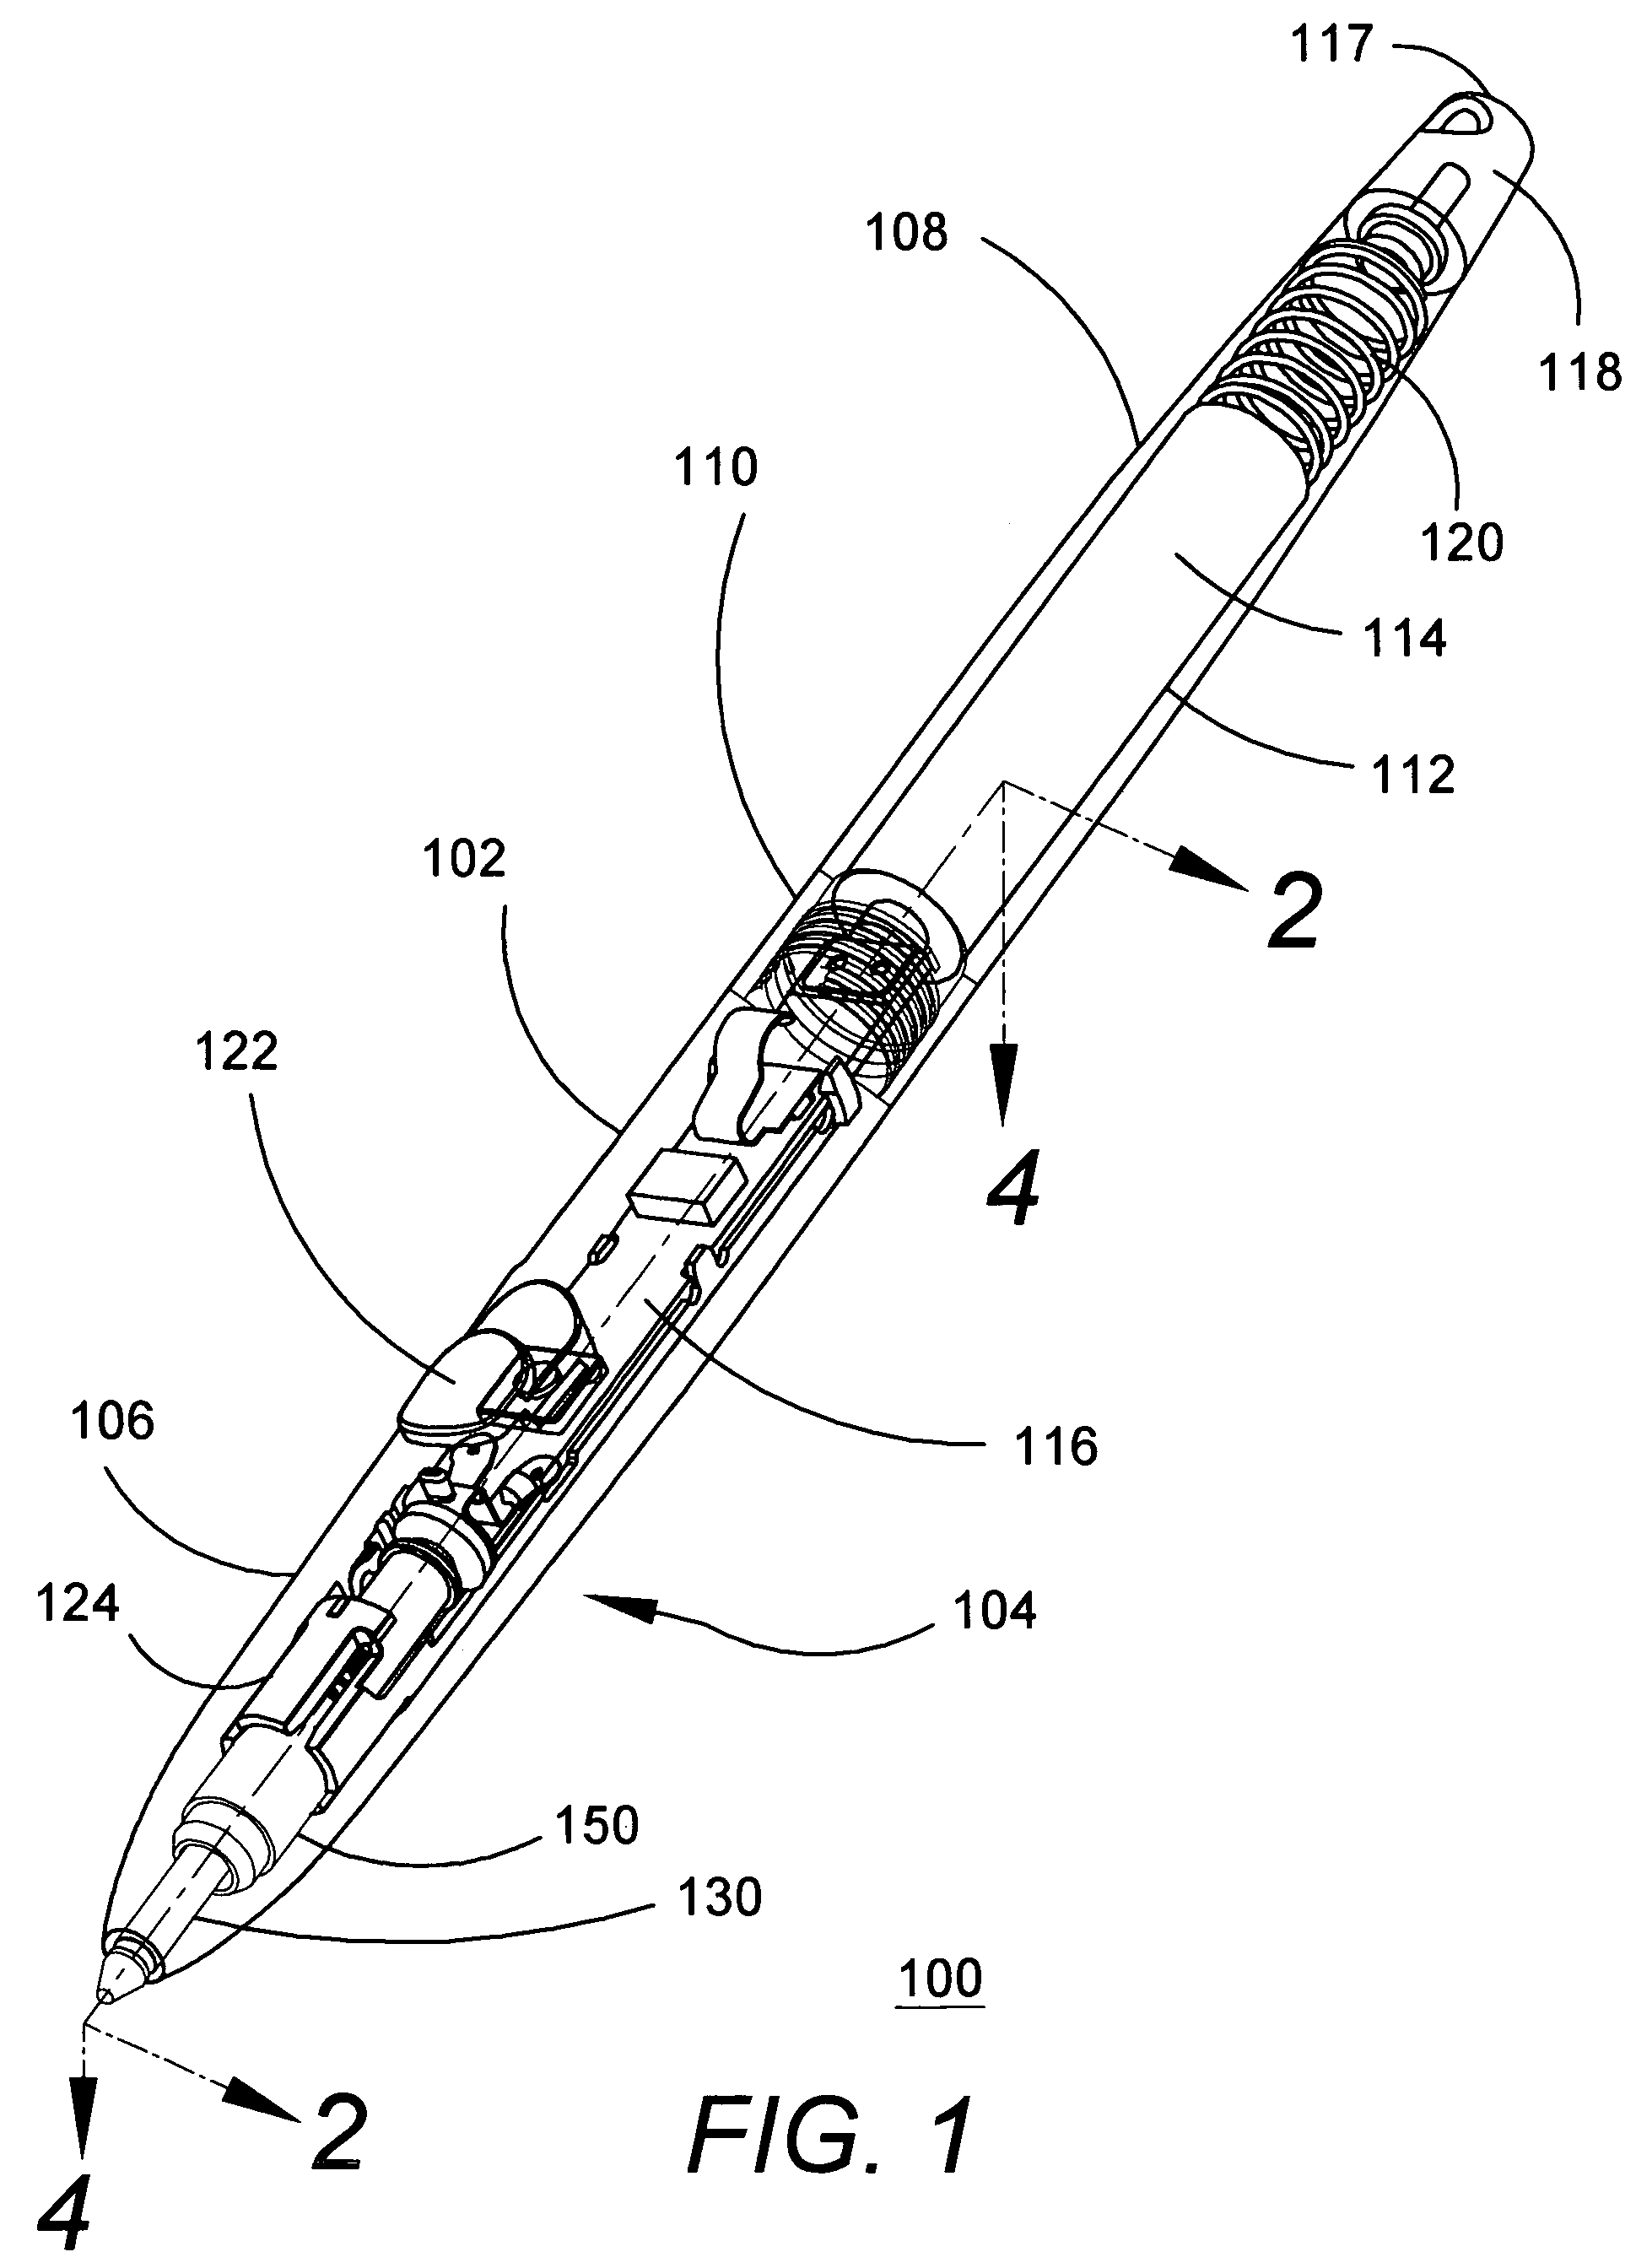 Pressure sensor for a digitizer pen